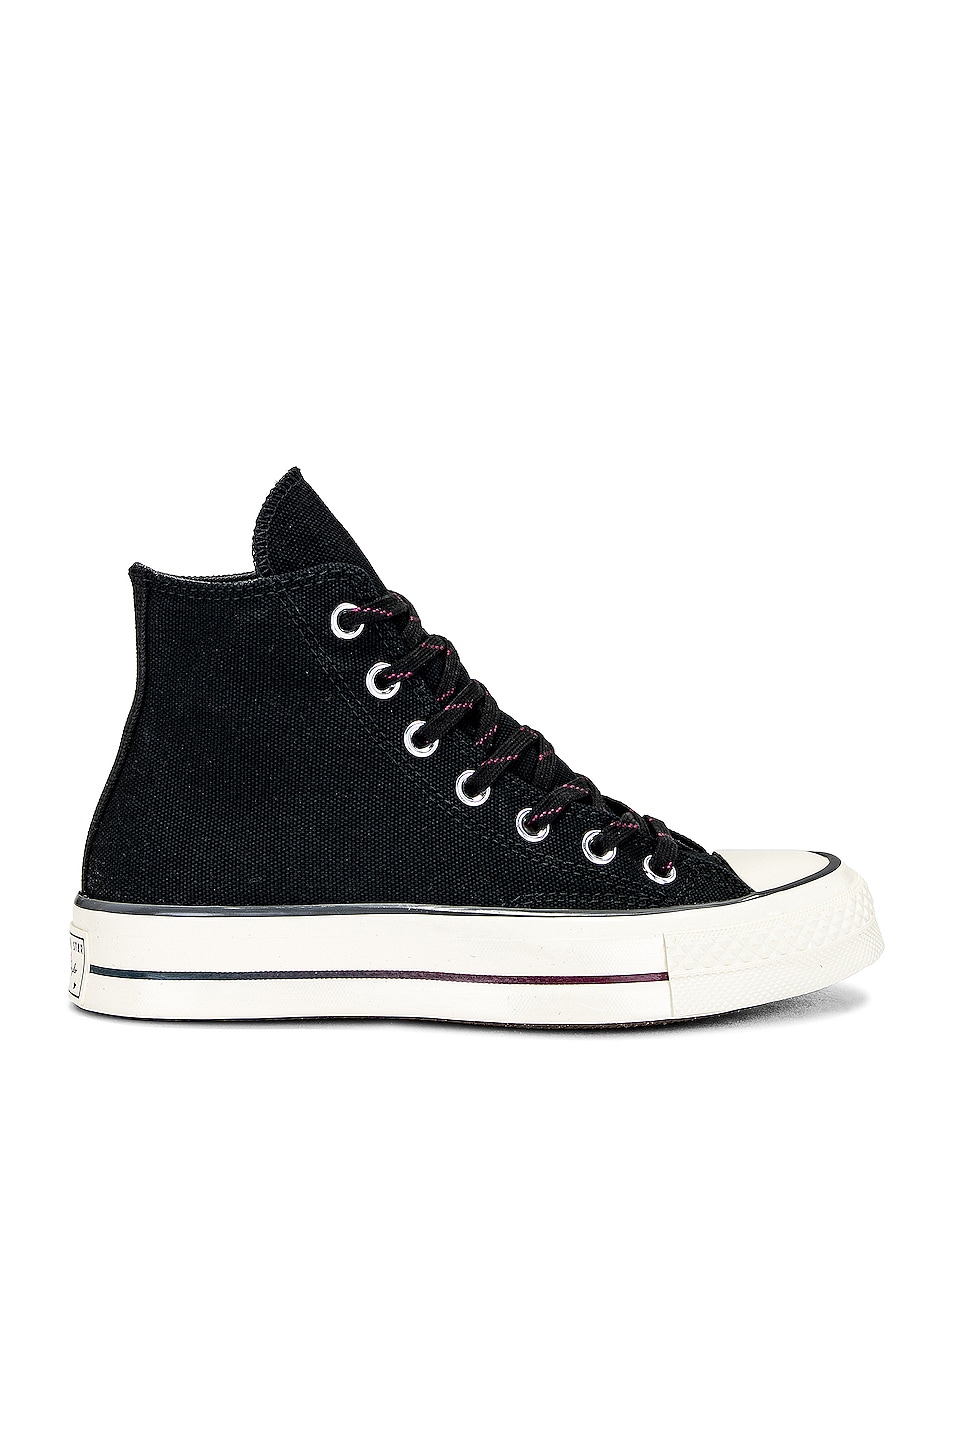 Converse Chuck 70 Sneaker in Black, Cyber Grey, Deep Sleep & Cherry ...